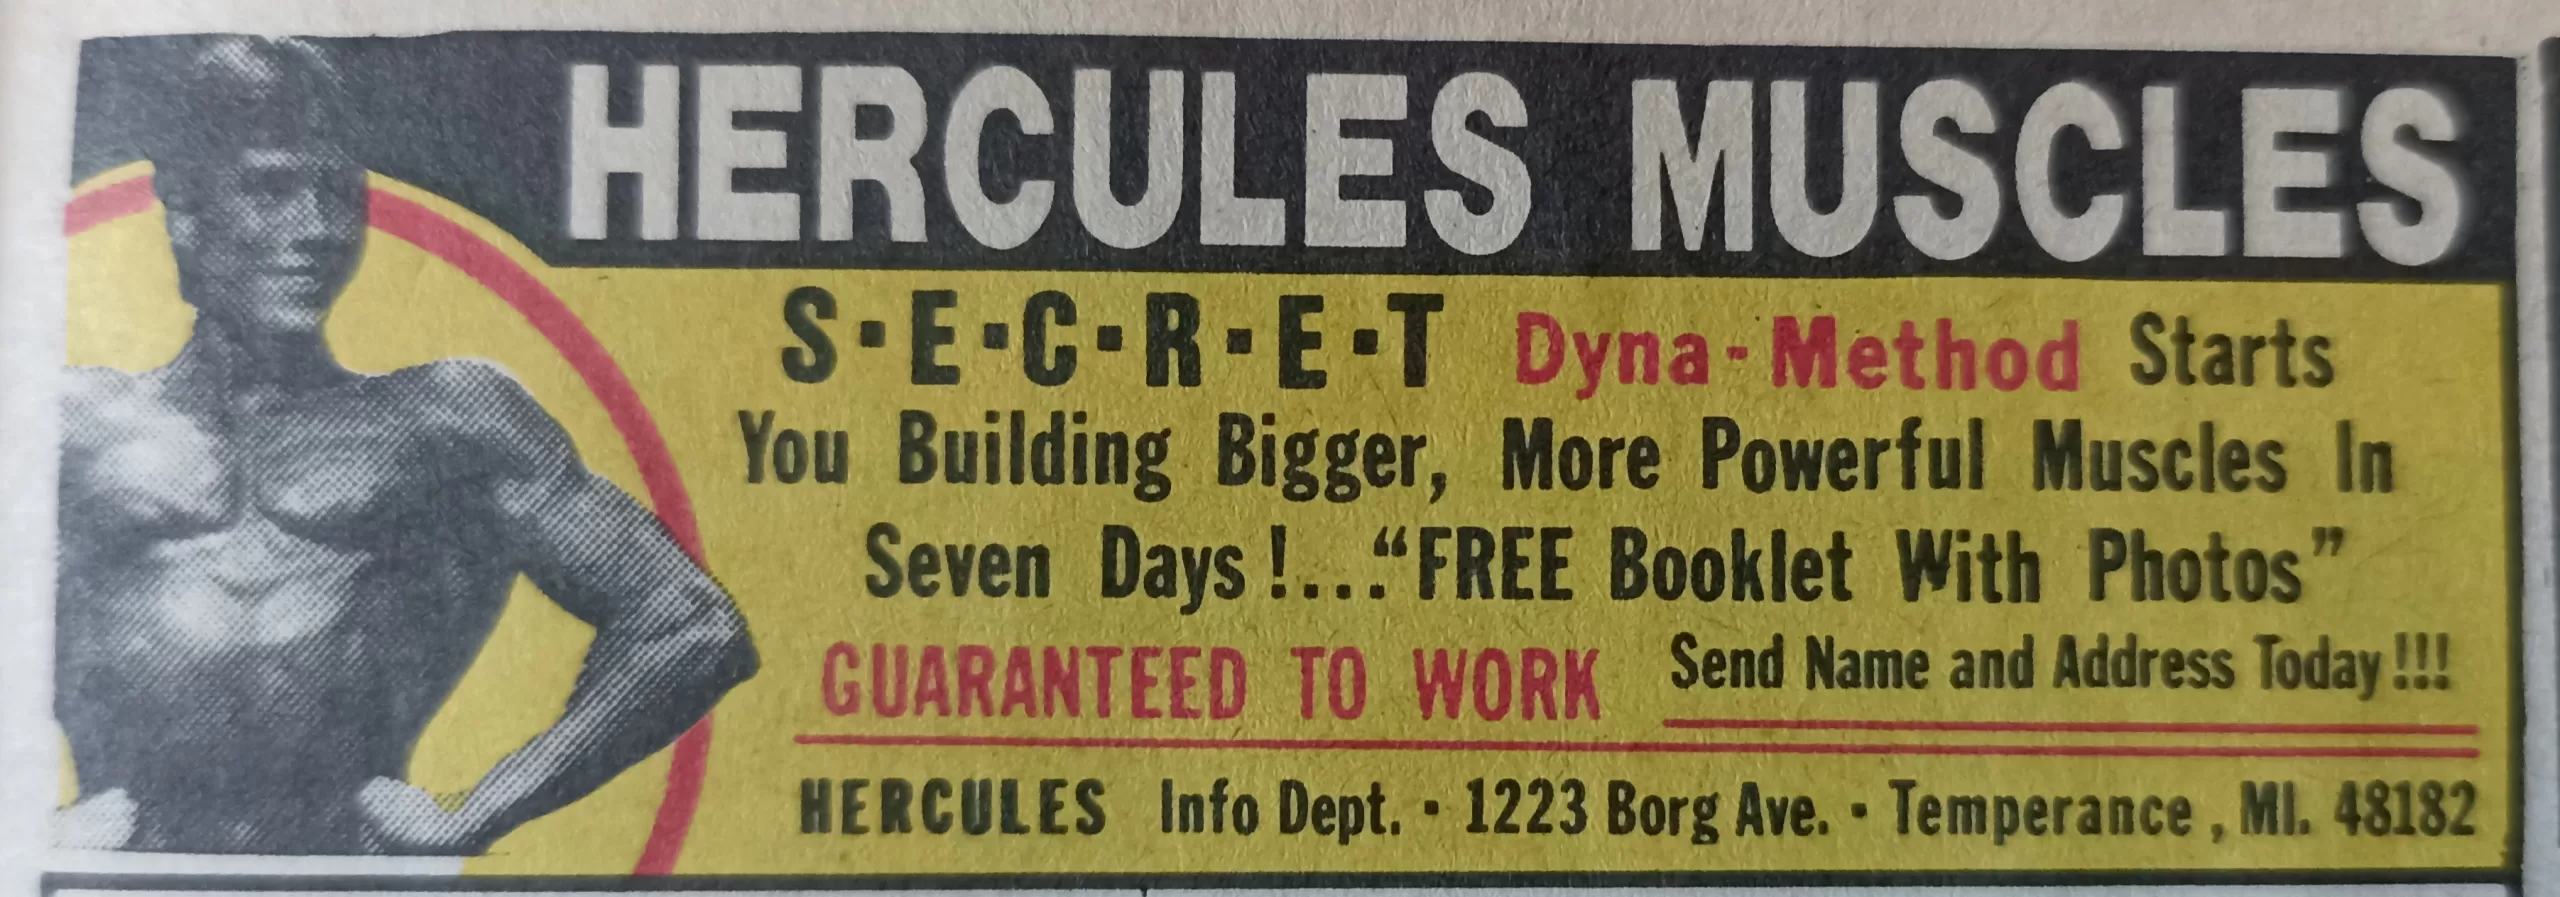 Hercules Muscles, Dyna-Method, 1992